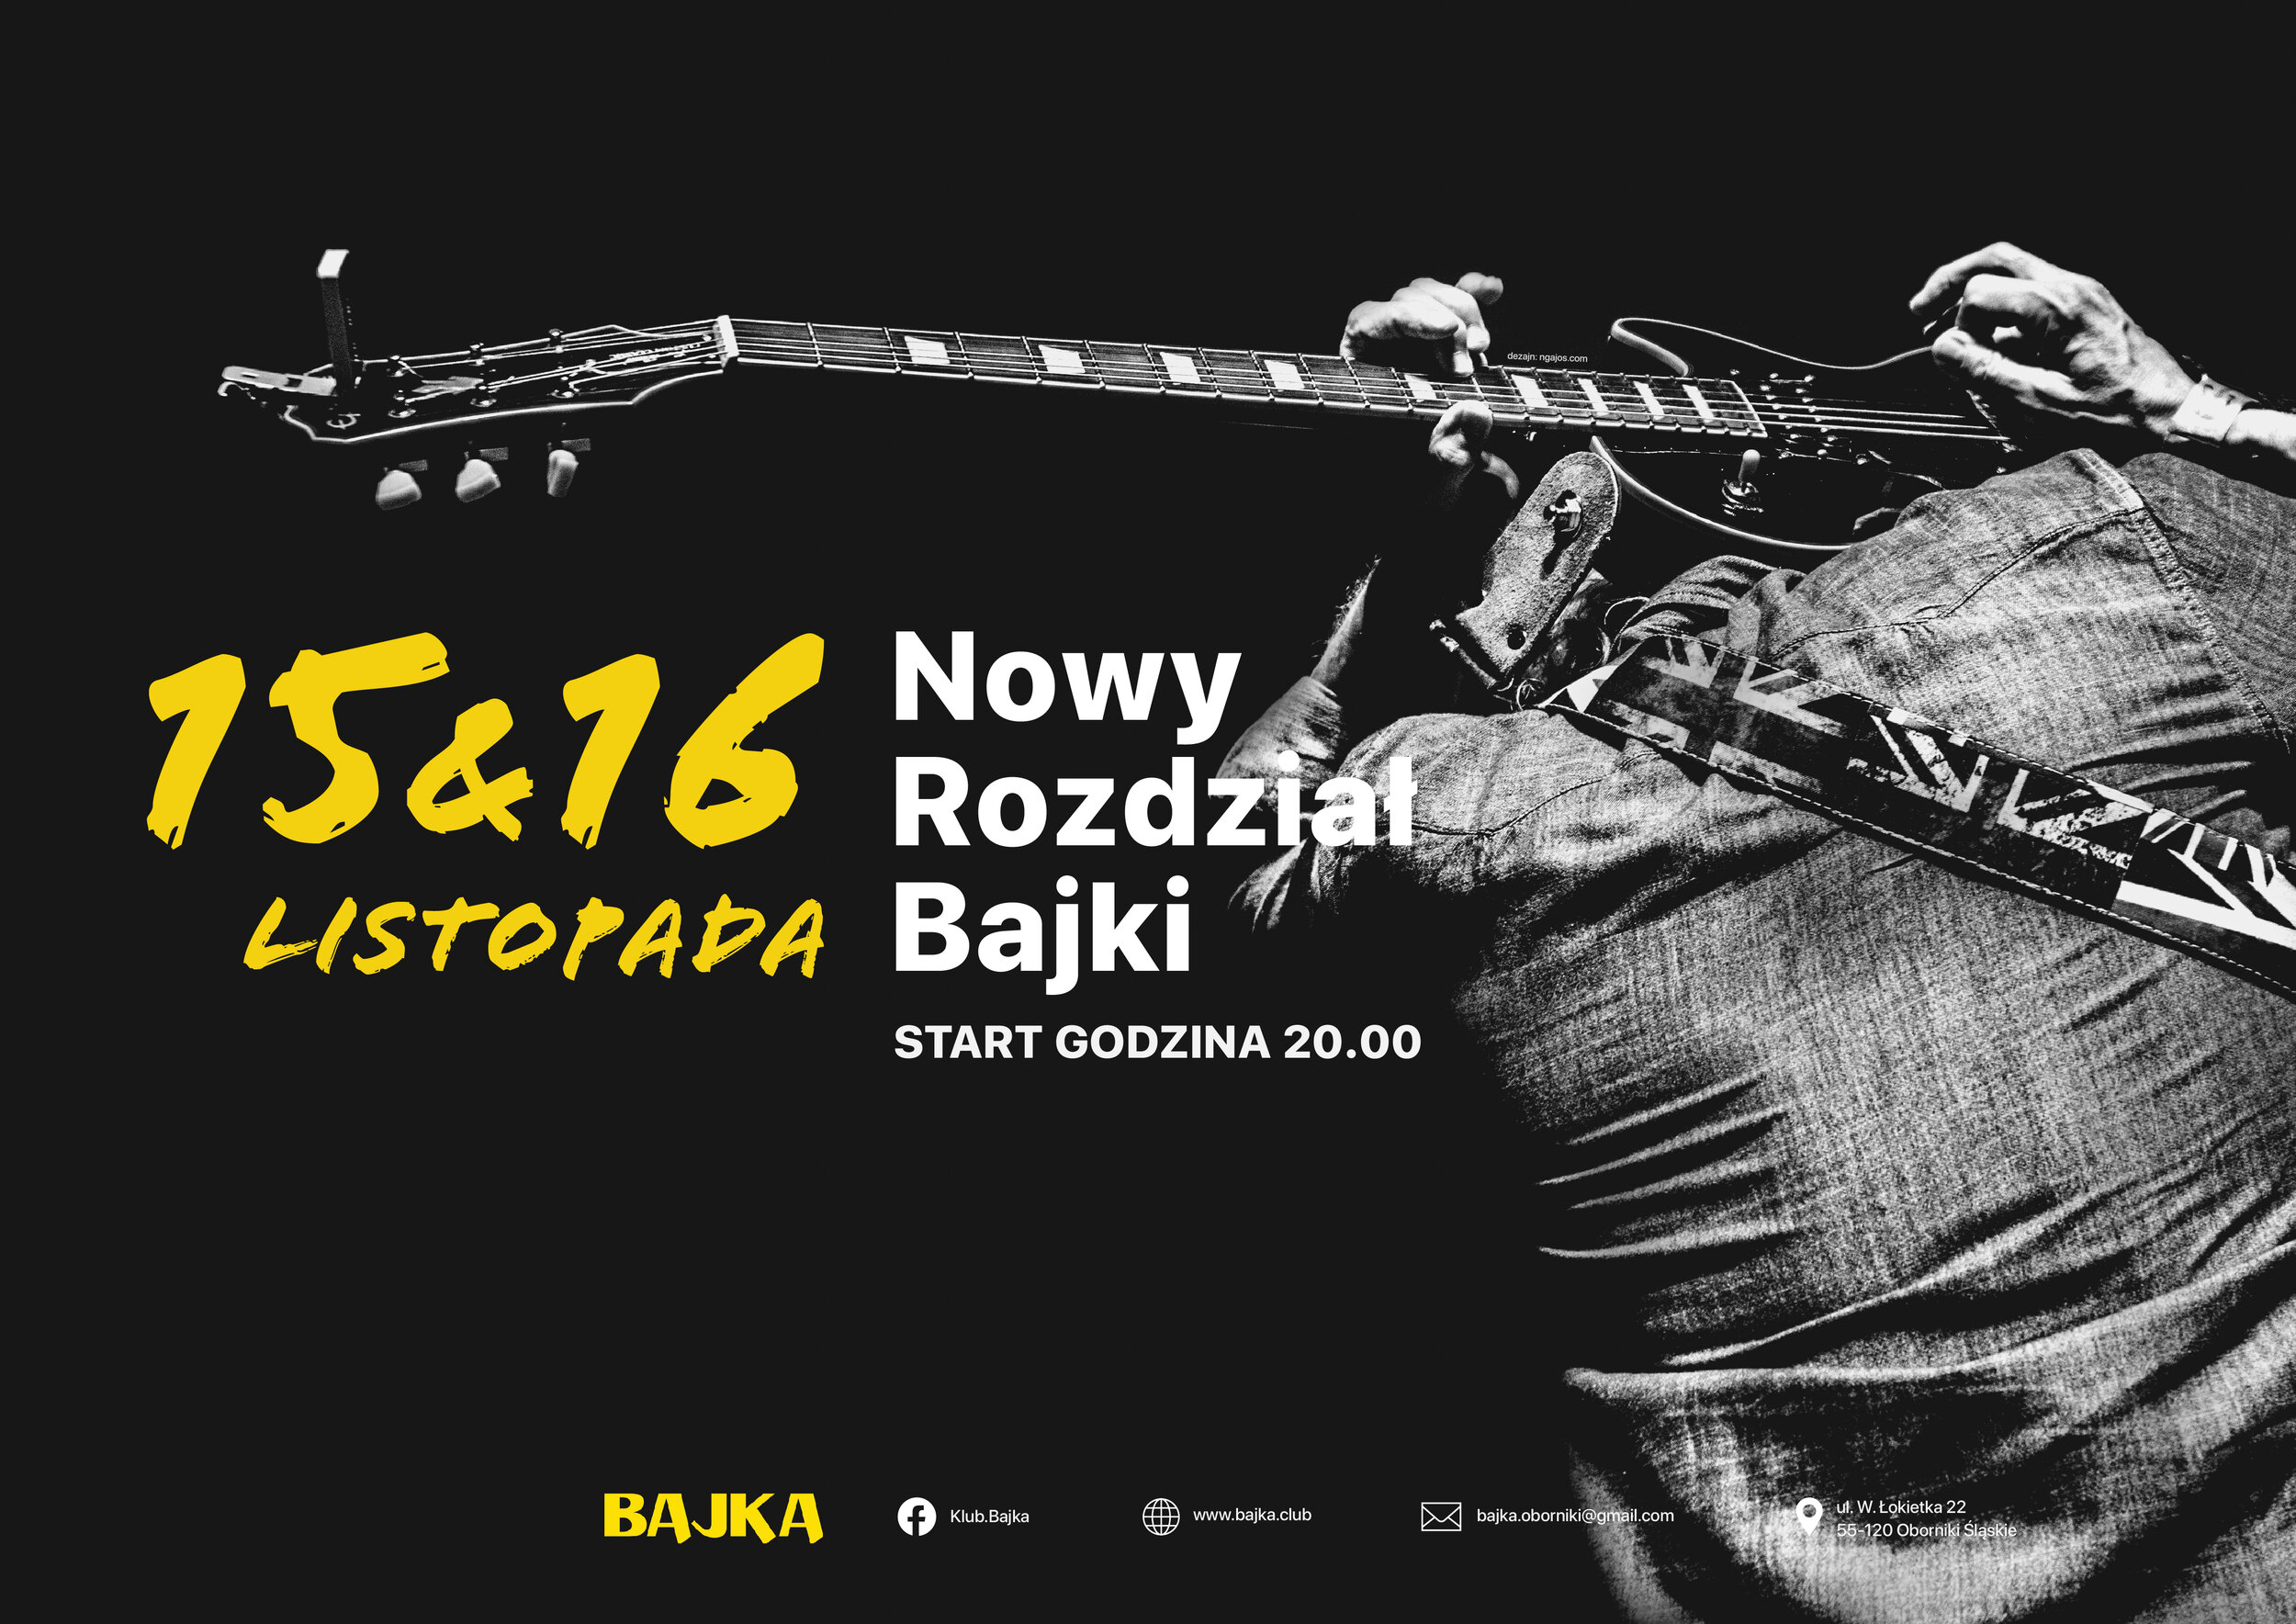 Bajka's opening event poster